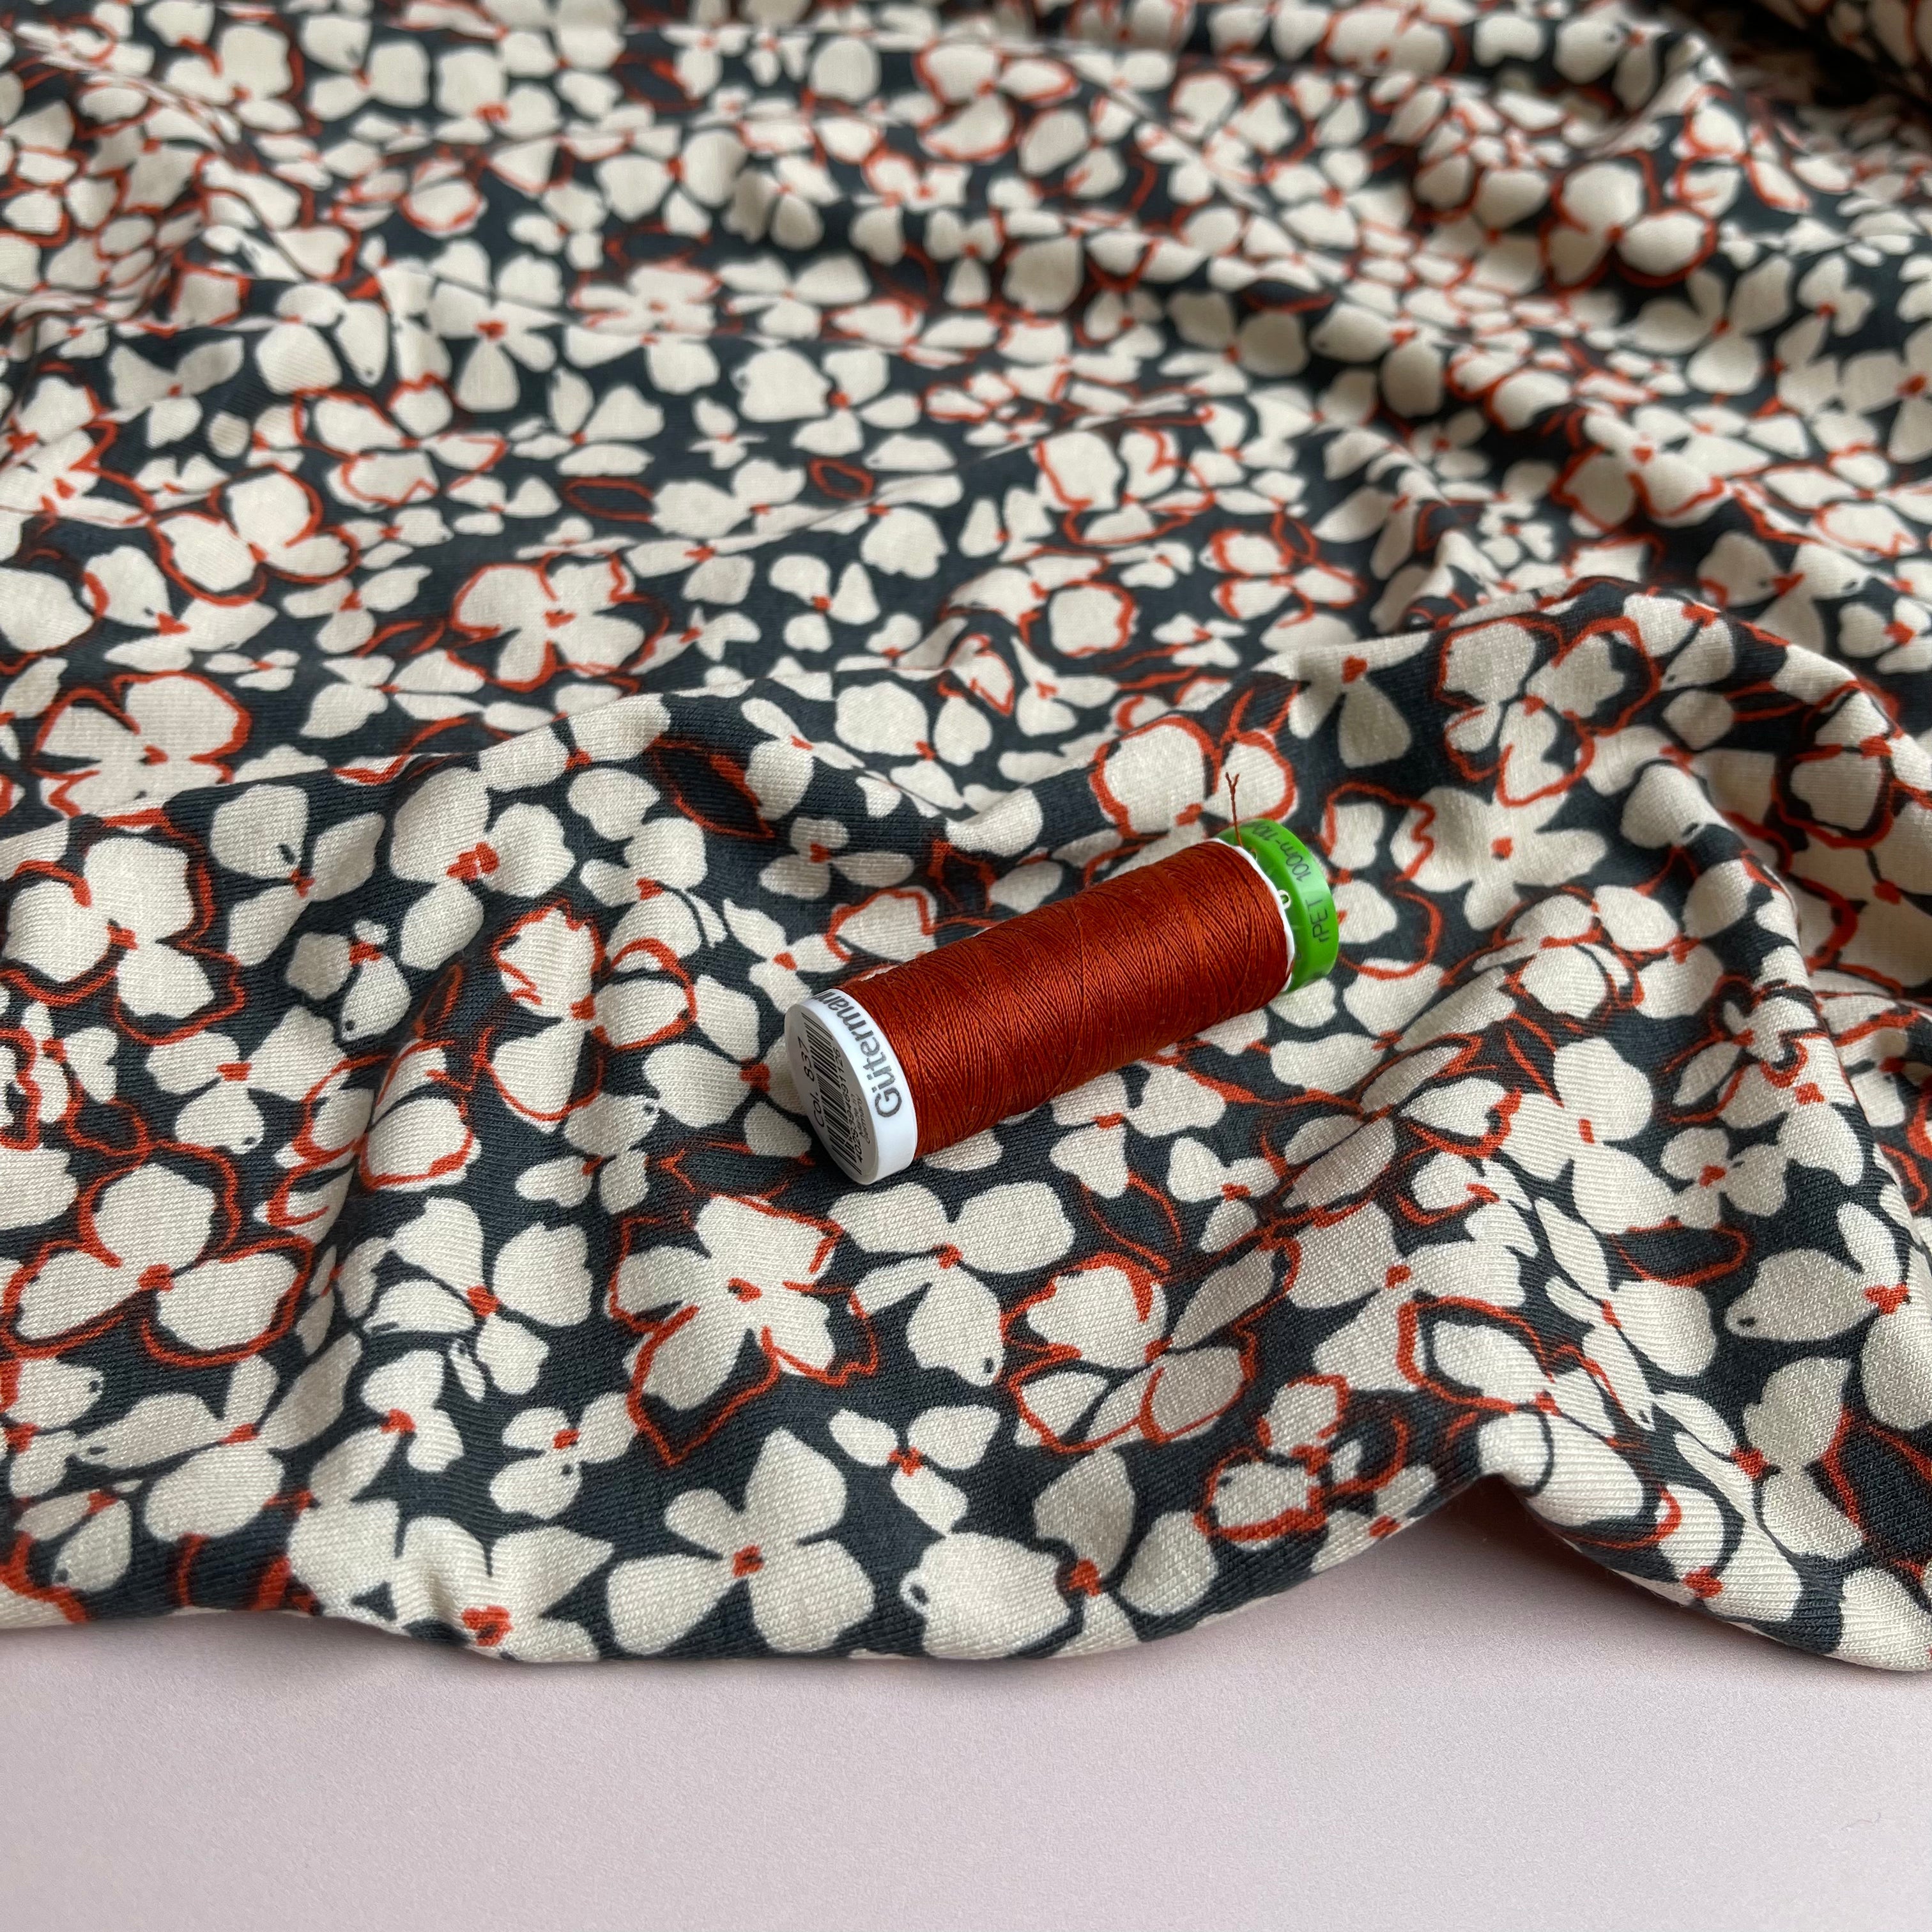 Petals on Grey Viscose Jersey Fabric